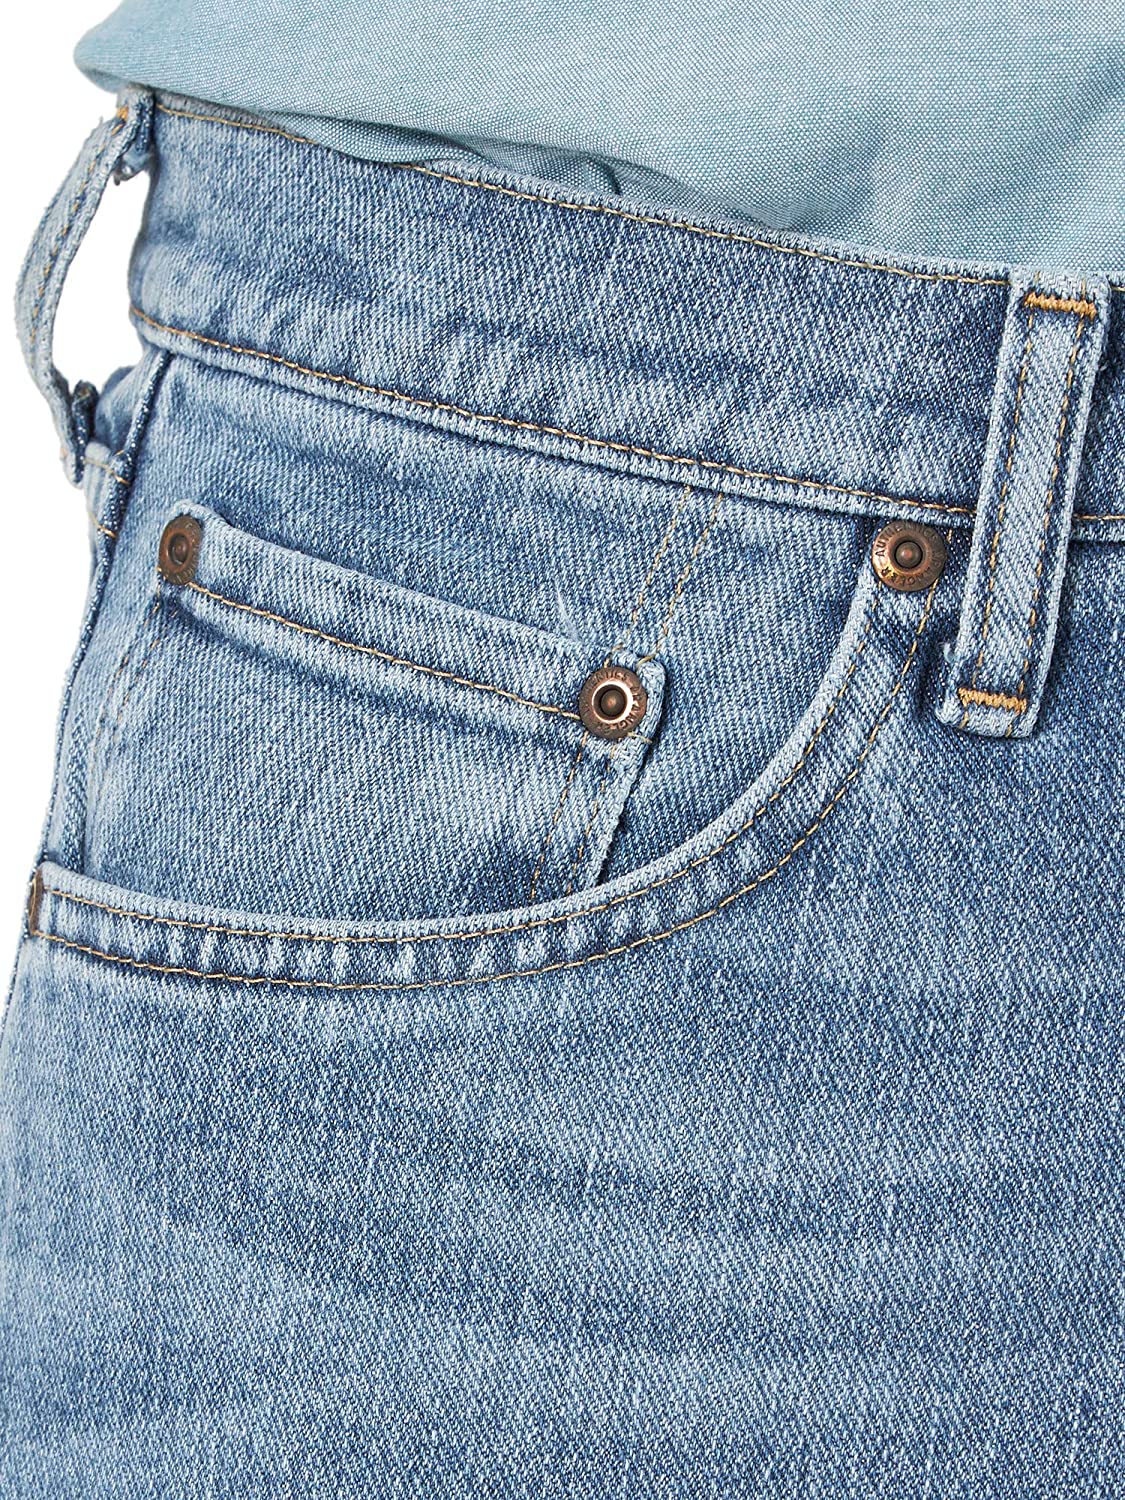 Wrangler Men's Classic Relaxed Fit Five Pocket Jean, Light Wash Flex ...